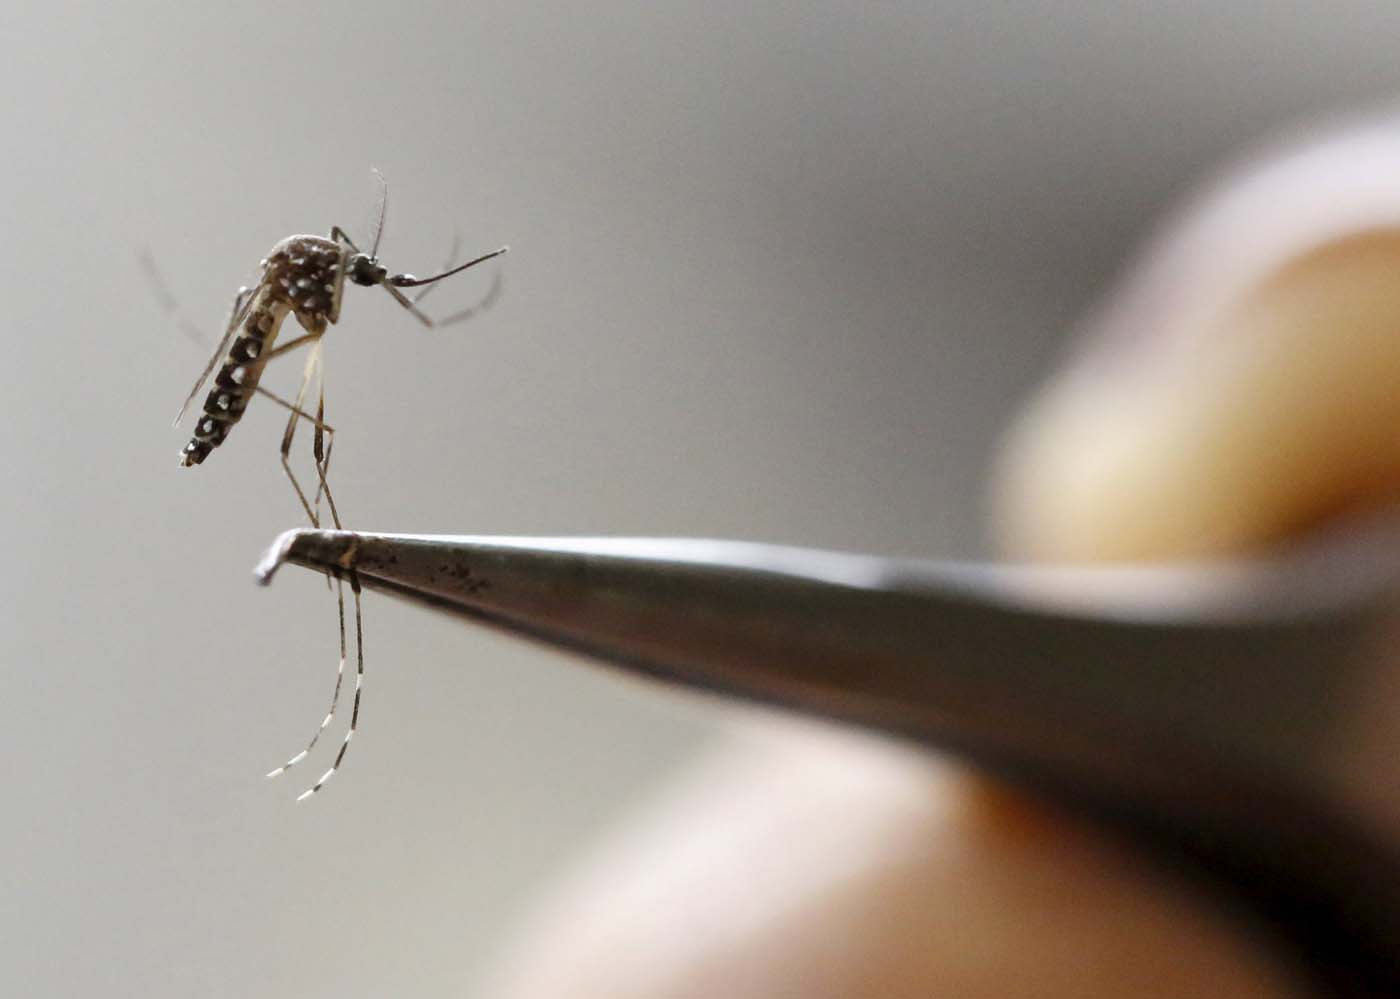  Alerta sanitaria por Zika